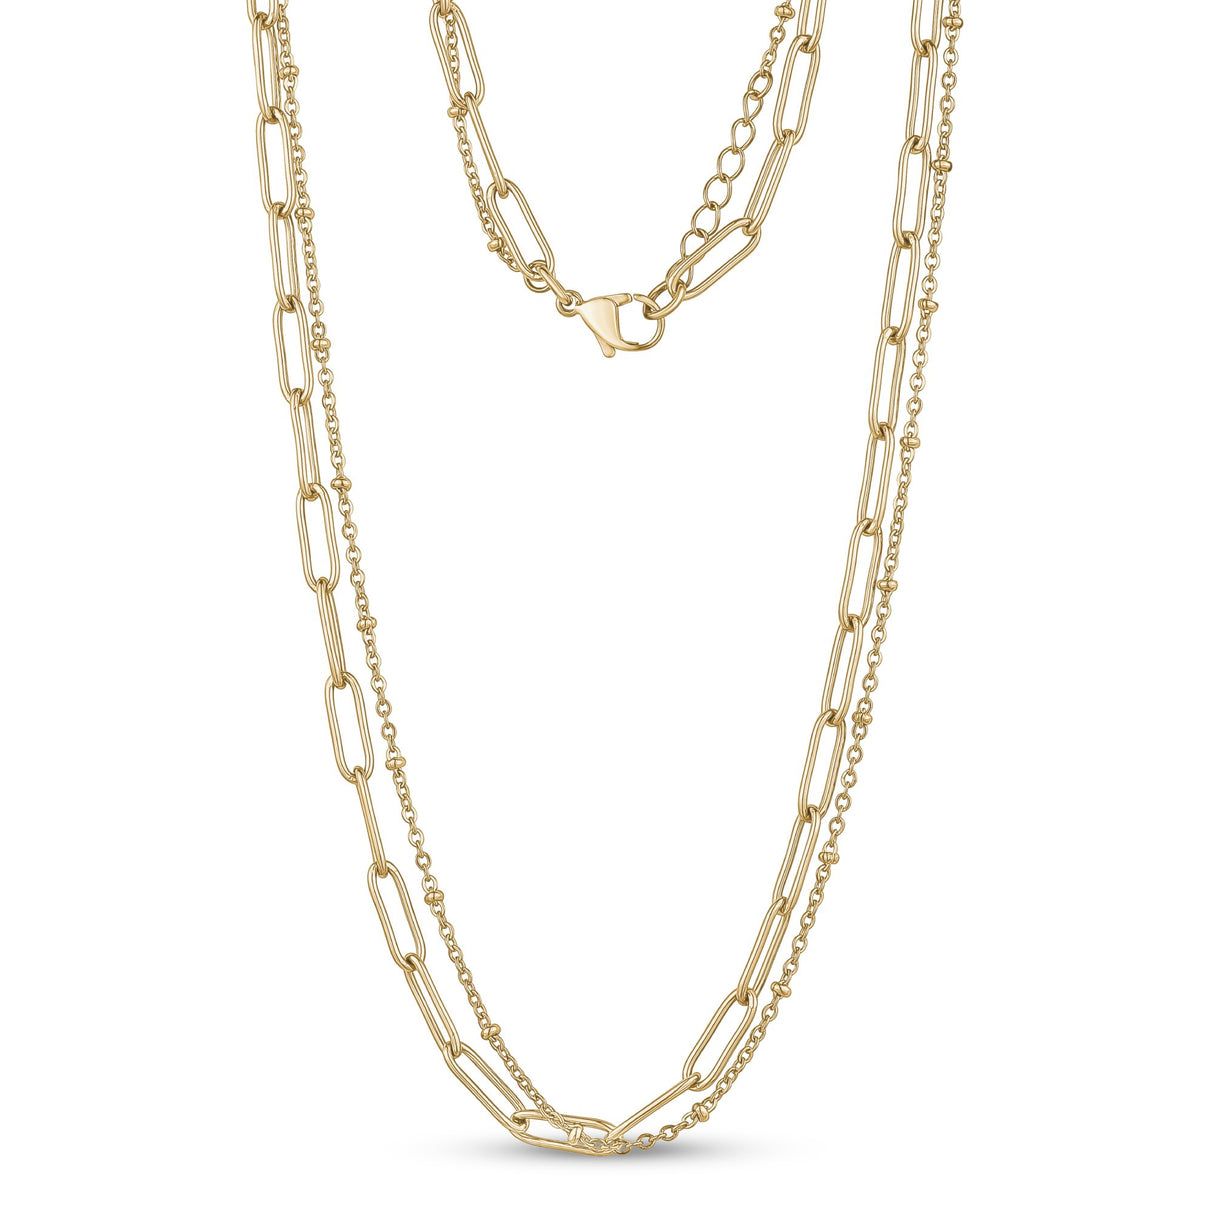 Collares de mujer - Collar de acero de doble cadena dorada con clip